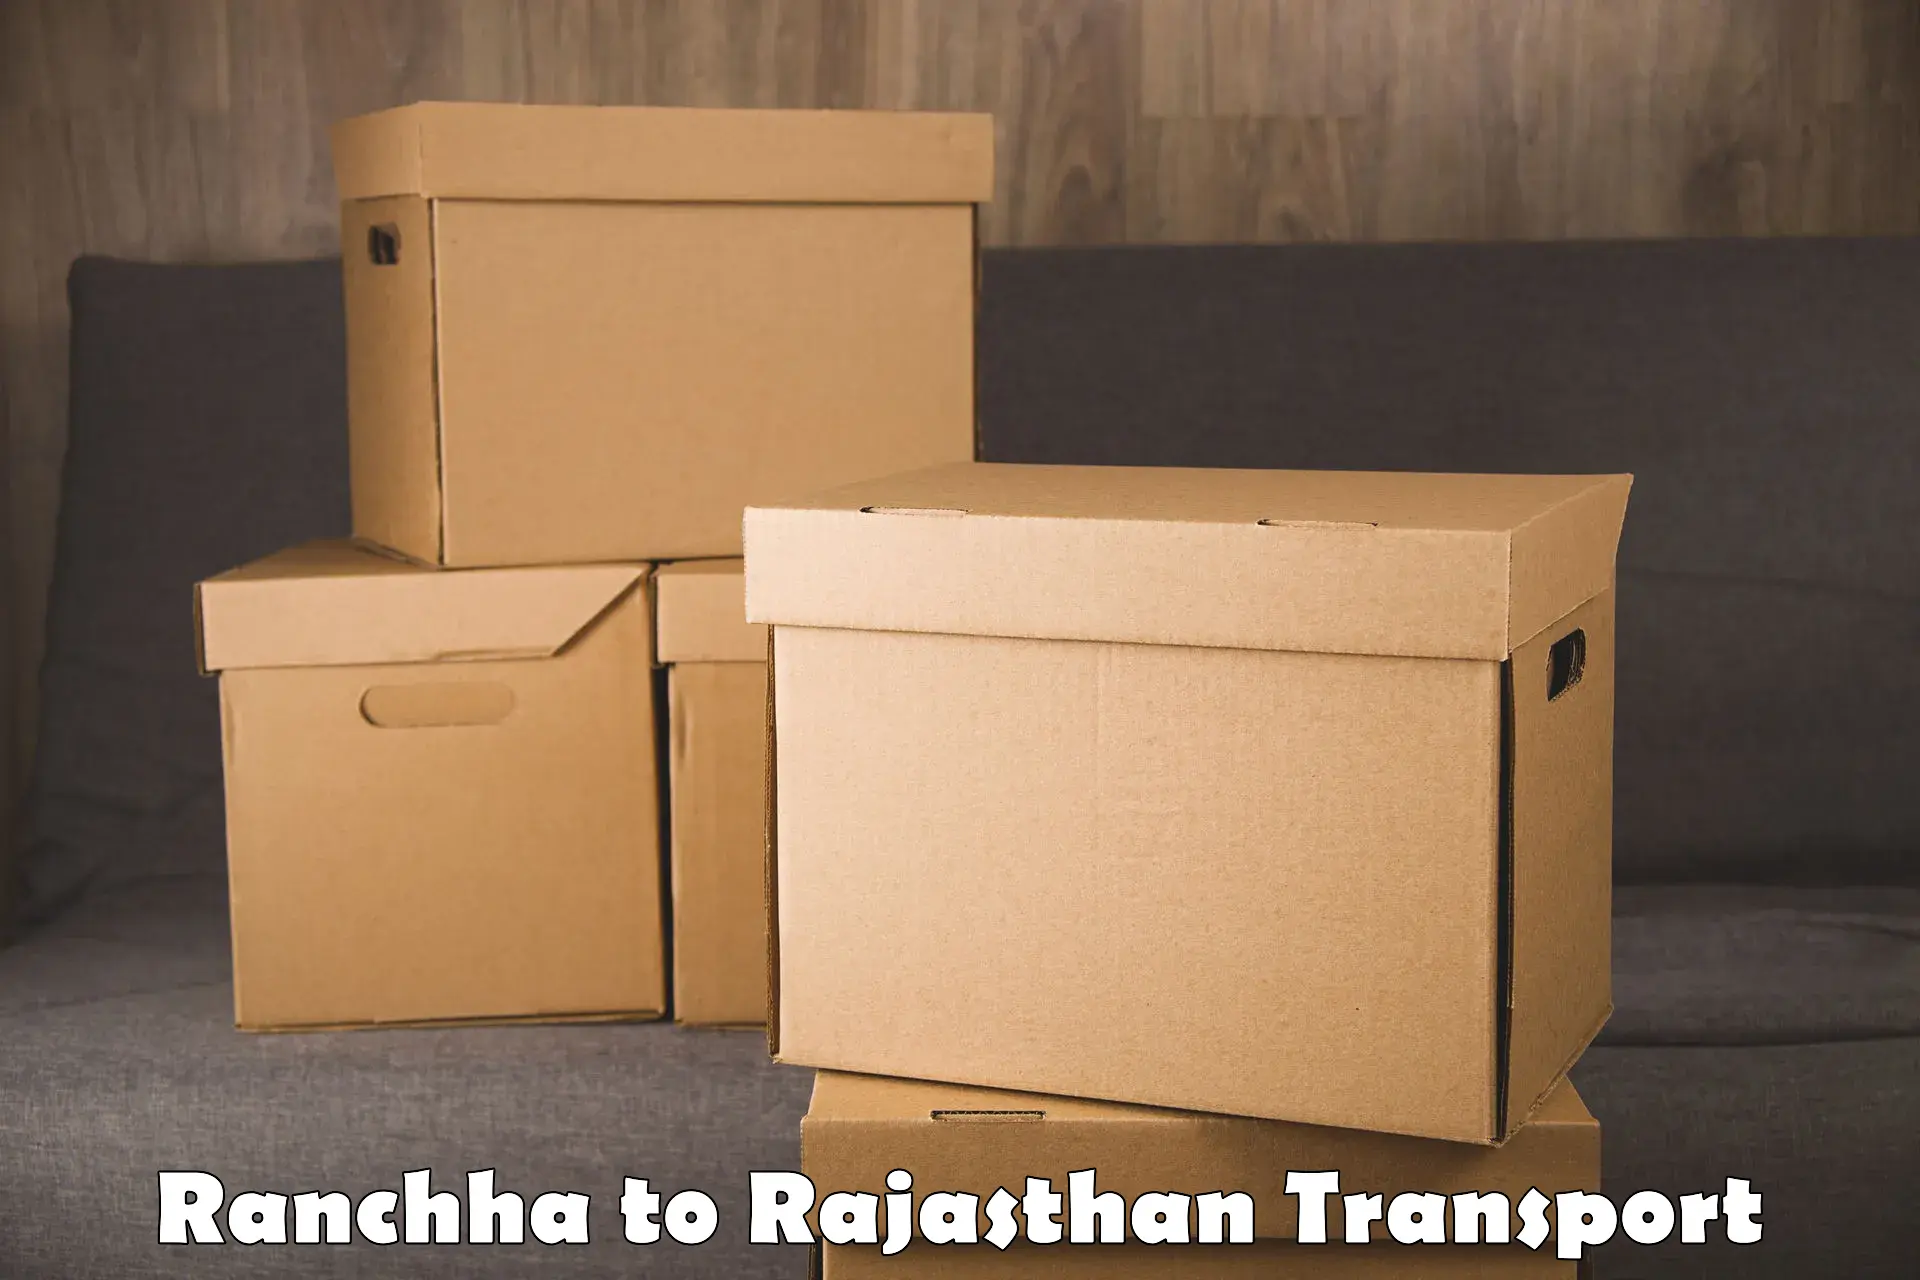 Truck transport companies in India Ranchha to Kherwara